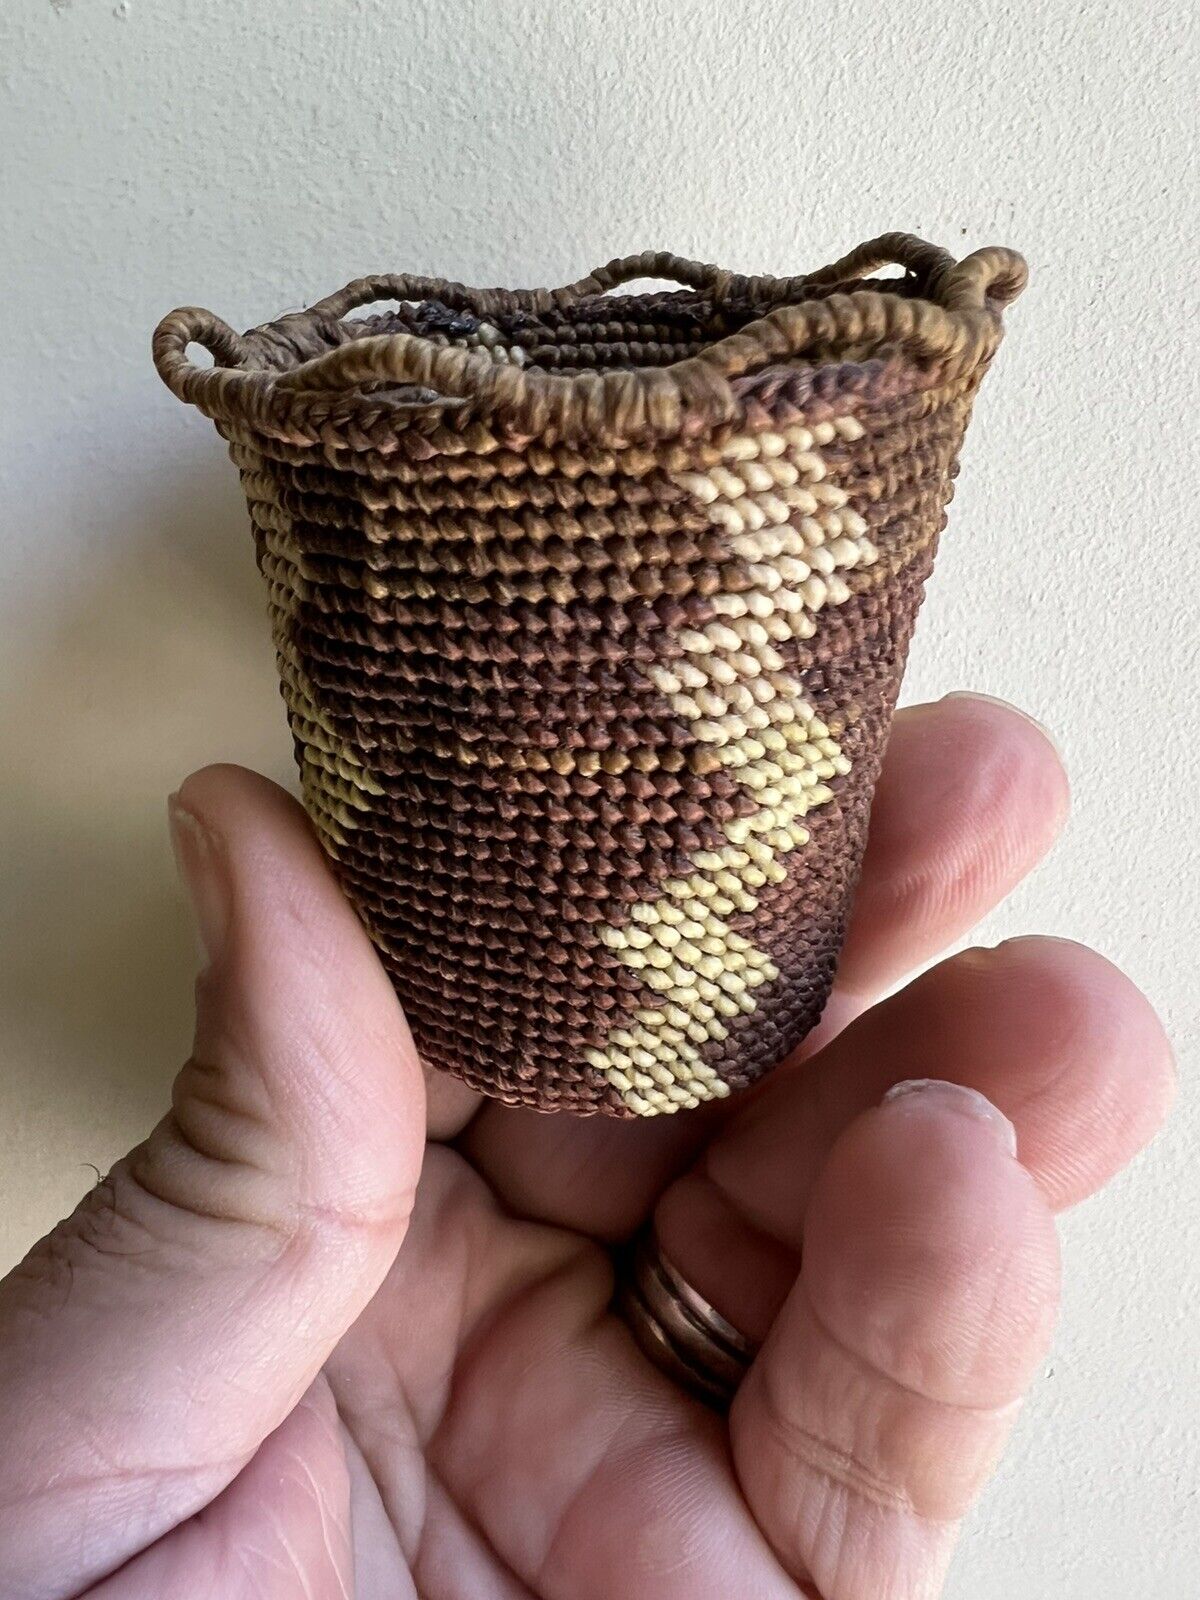 Very Nice Antique Miniature Klickitat Basket, 2”x2”, From Arizona Estate.